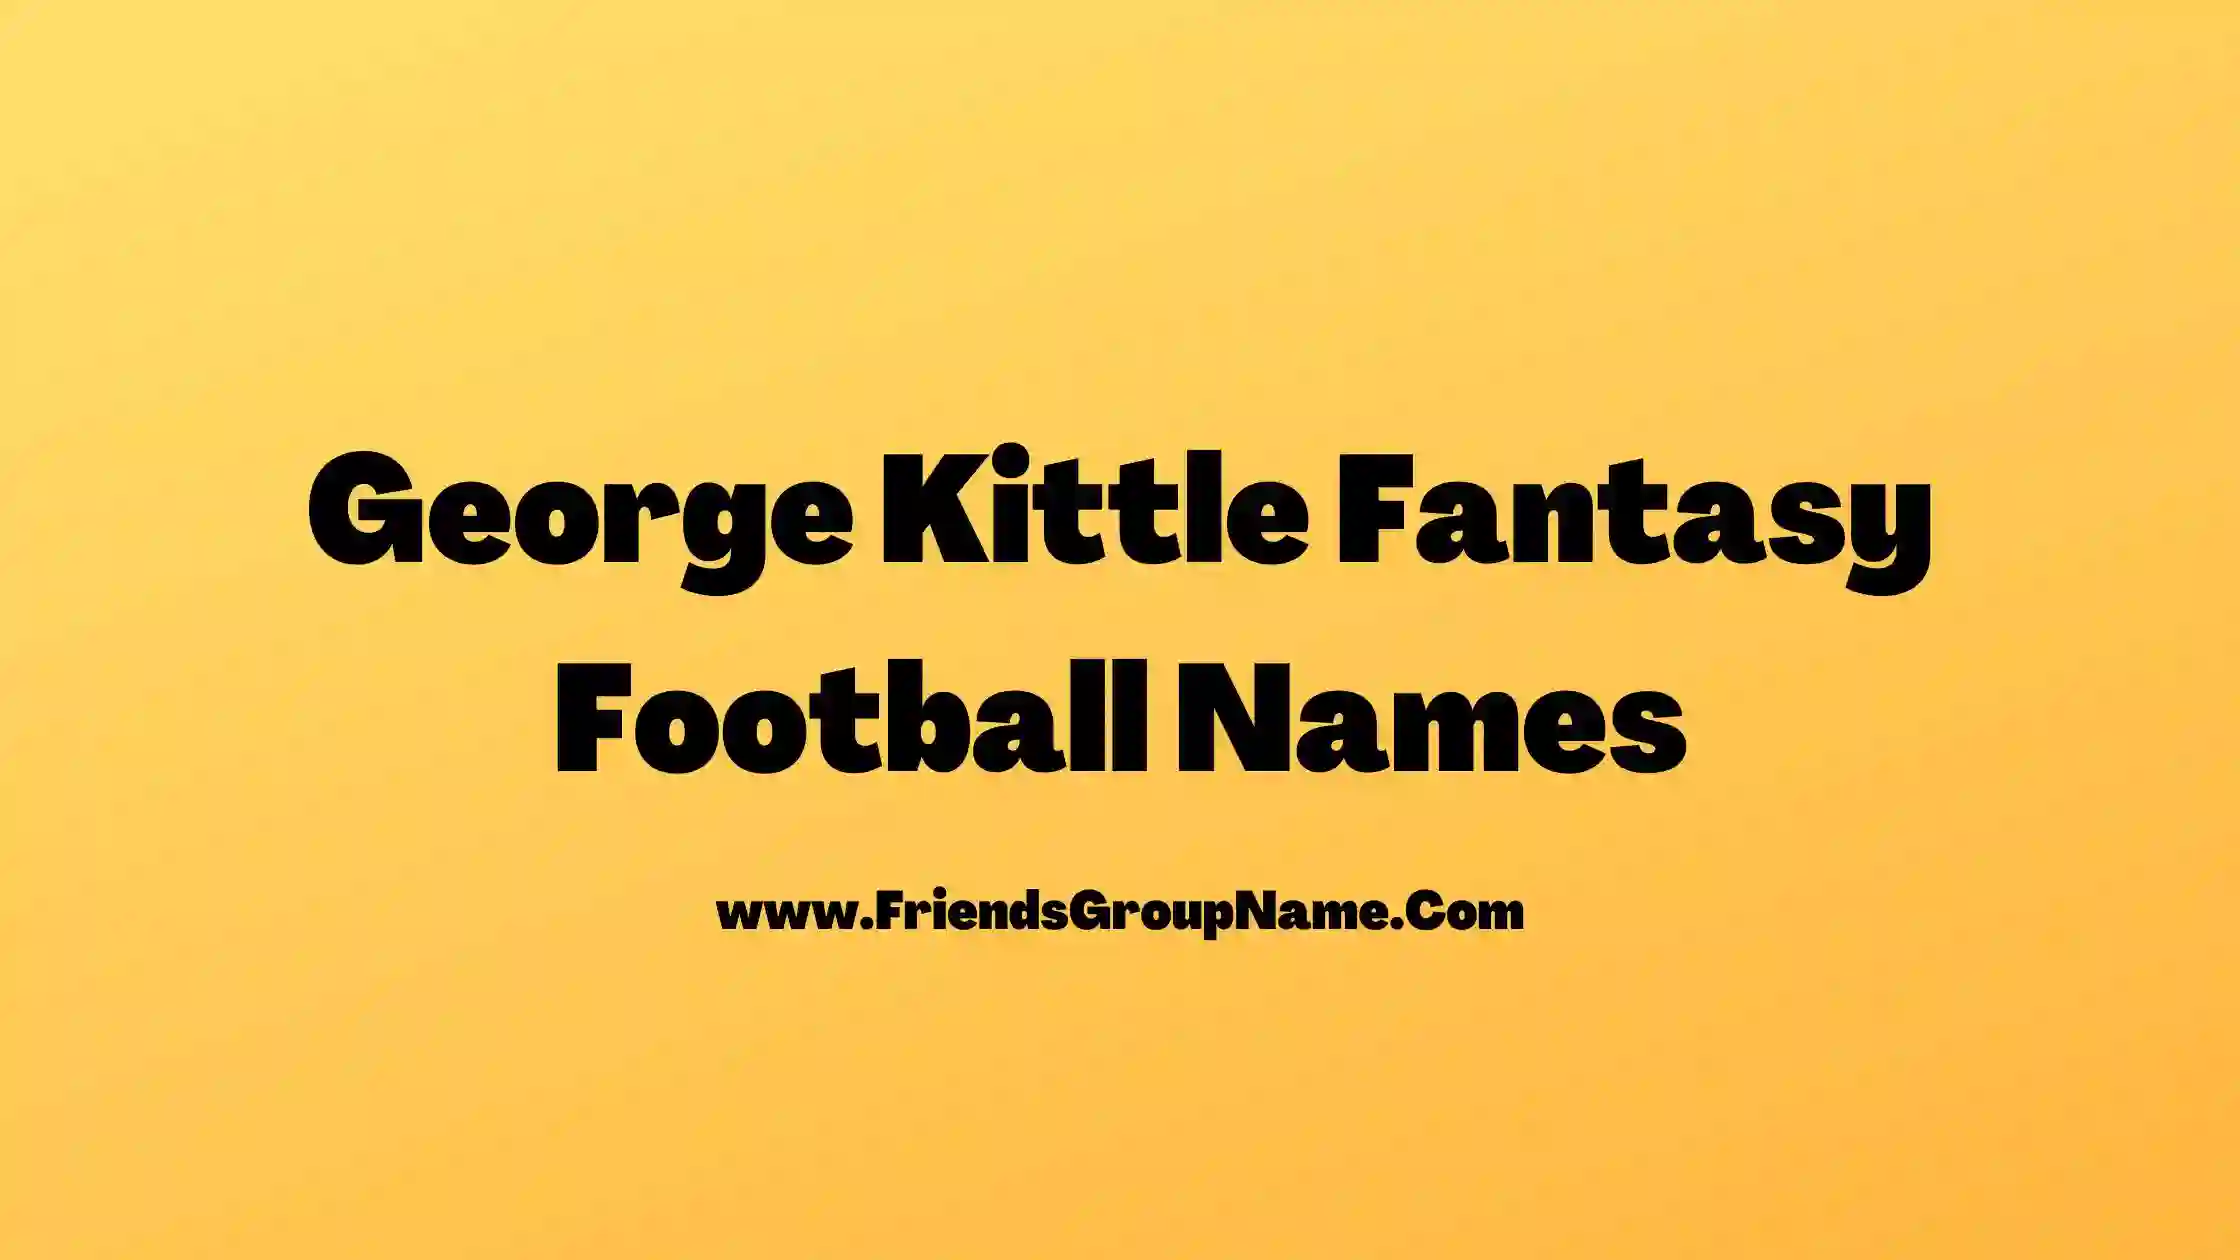 George Kittle Fantasy Football Names